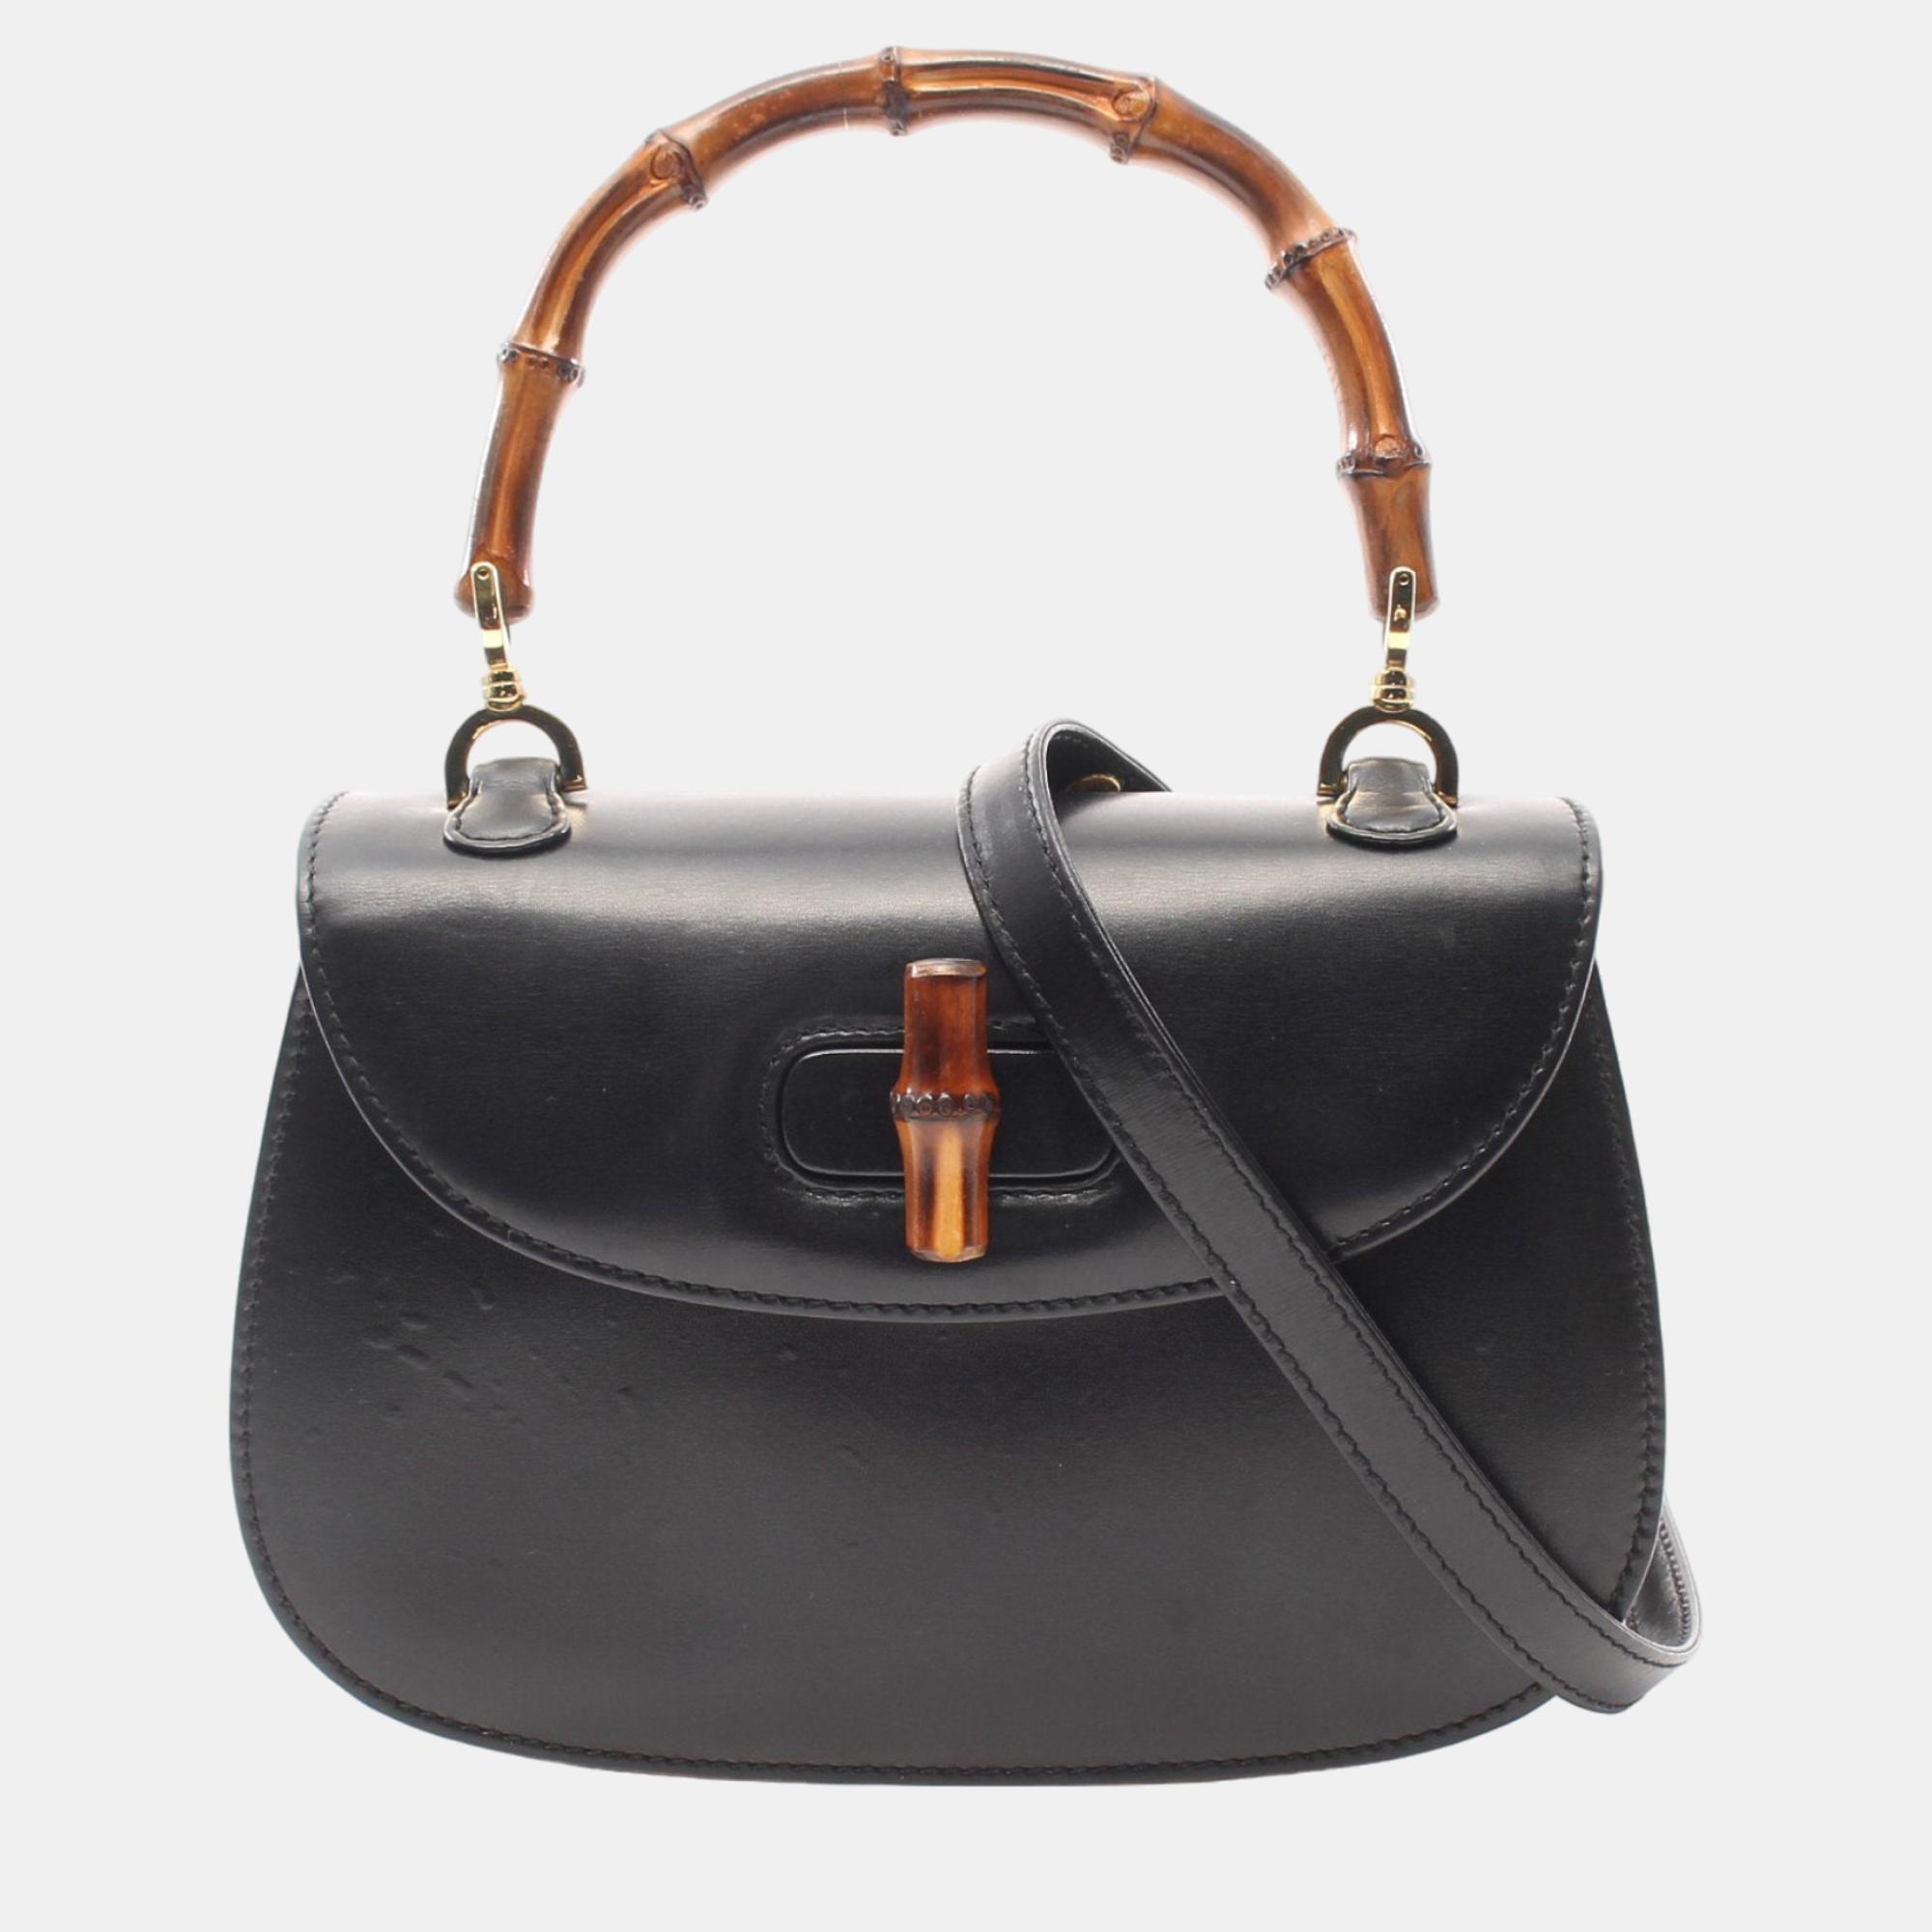 Gucci bamboo handbag leather black 2way